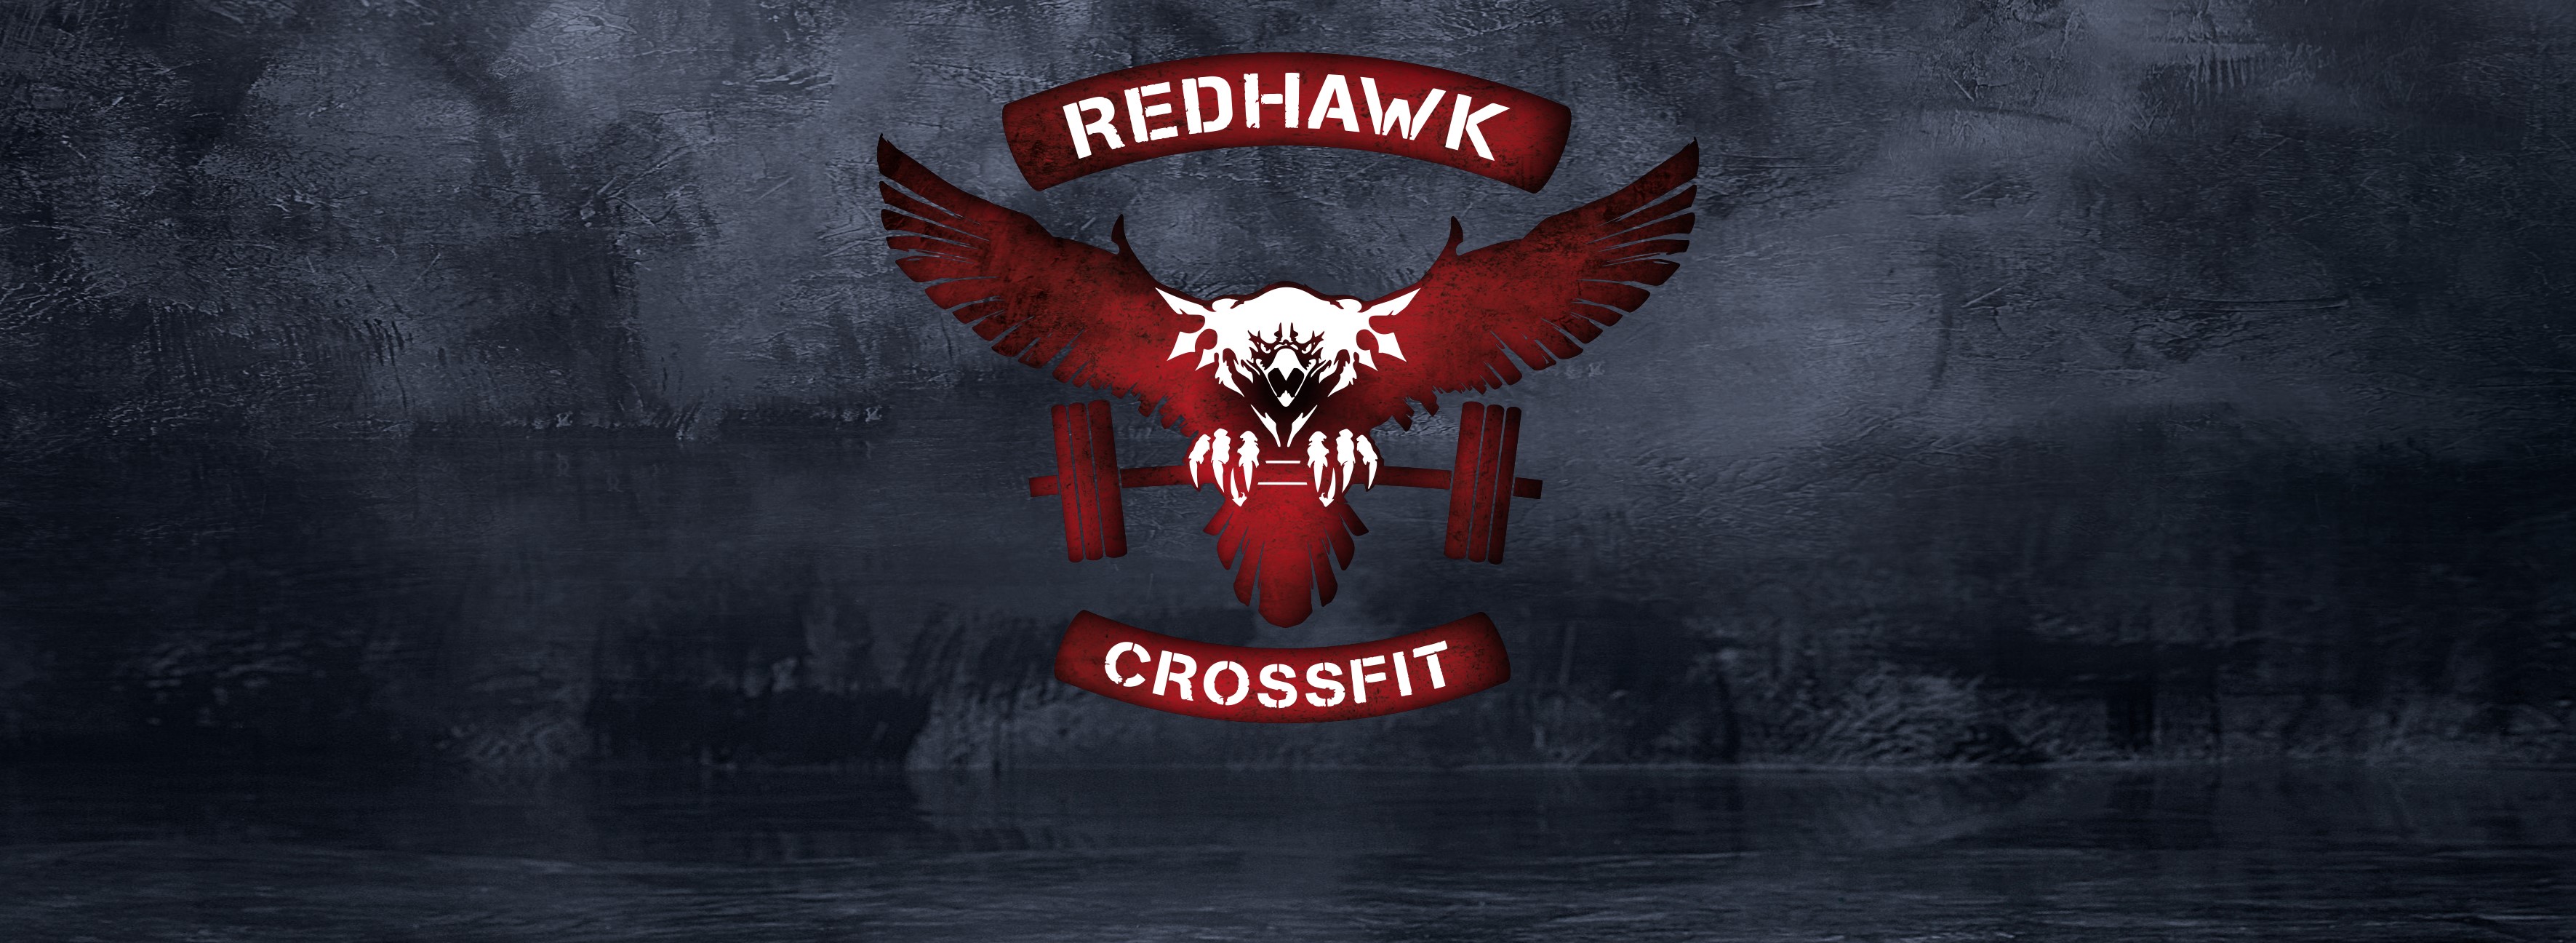 (c) Redhawkcrossfit.com